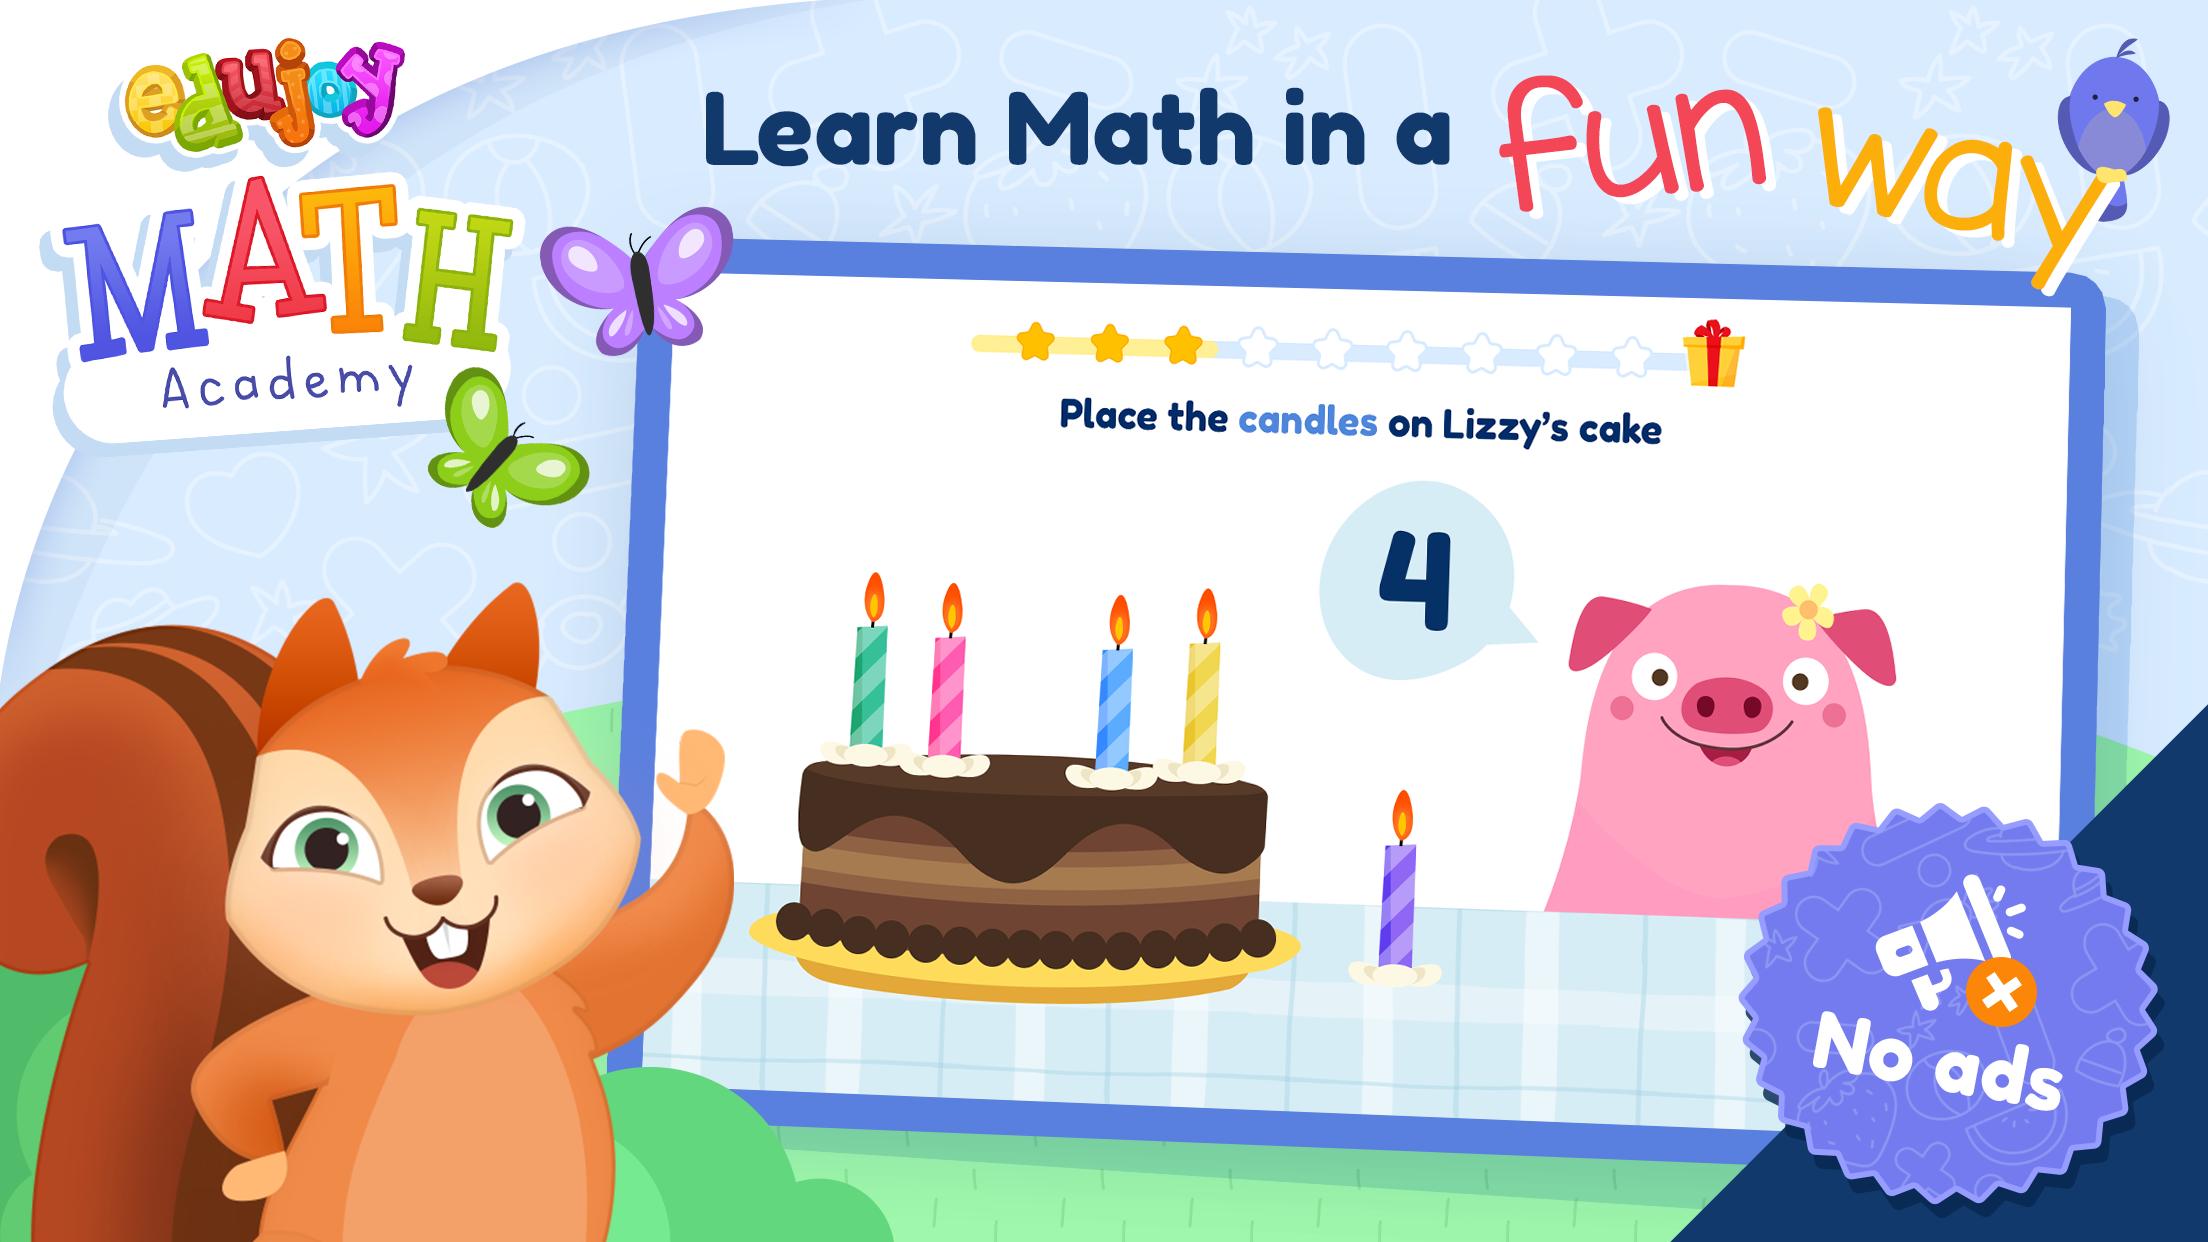 Edujoy Math Academy - Learn Maths 7.8 Screenshot 1